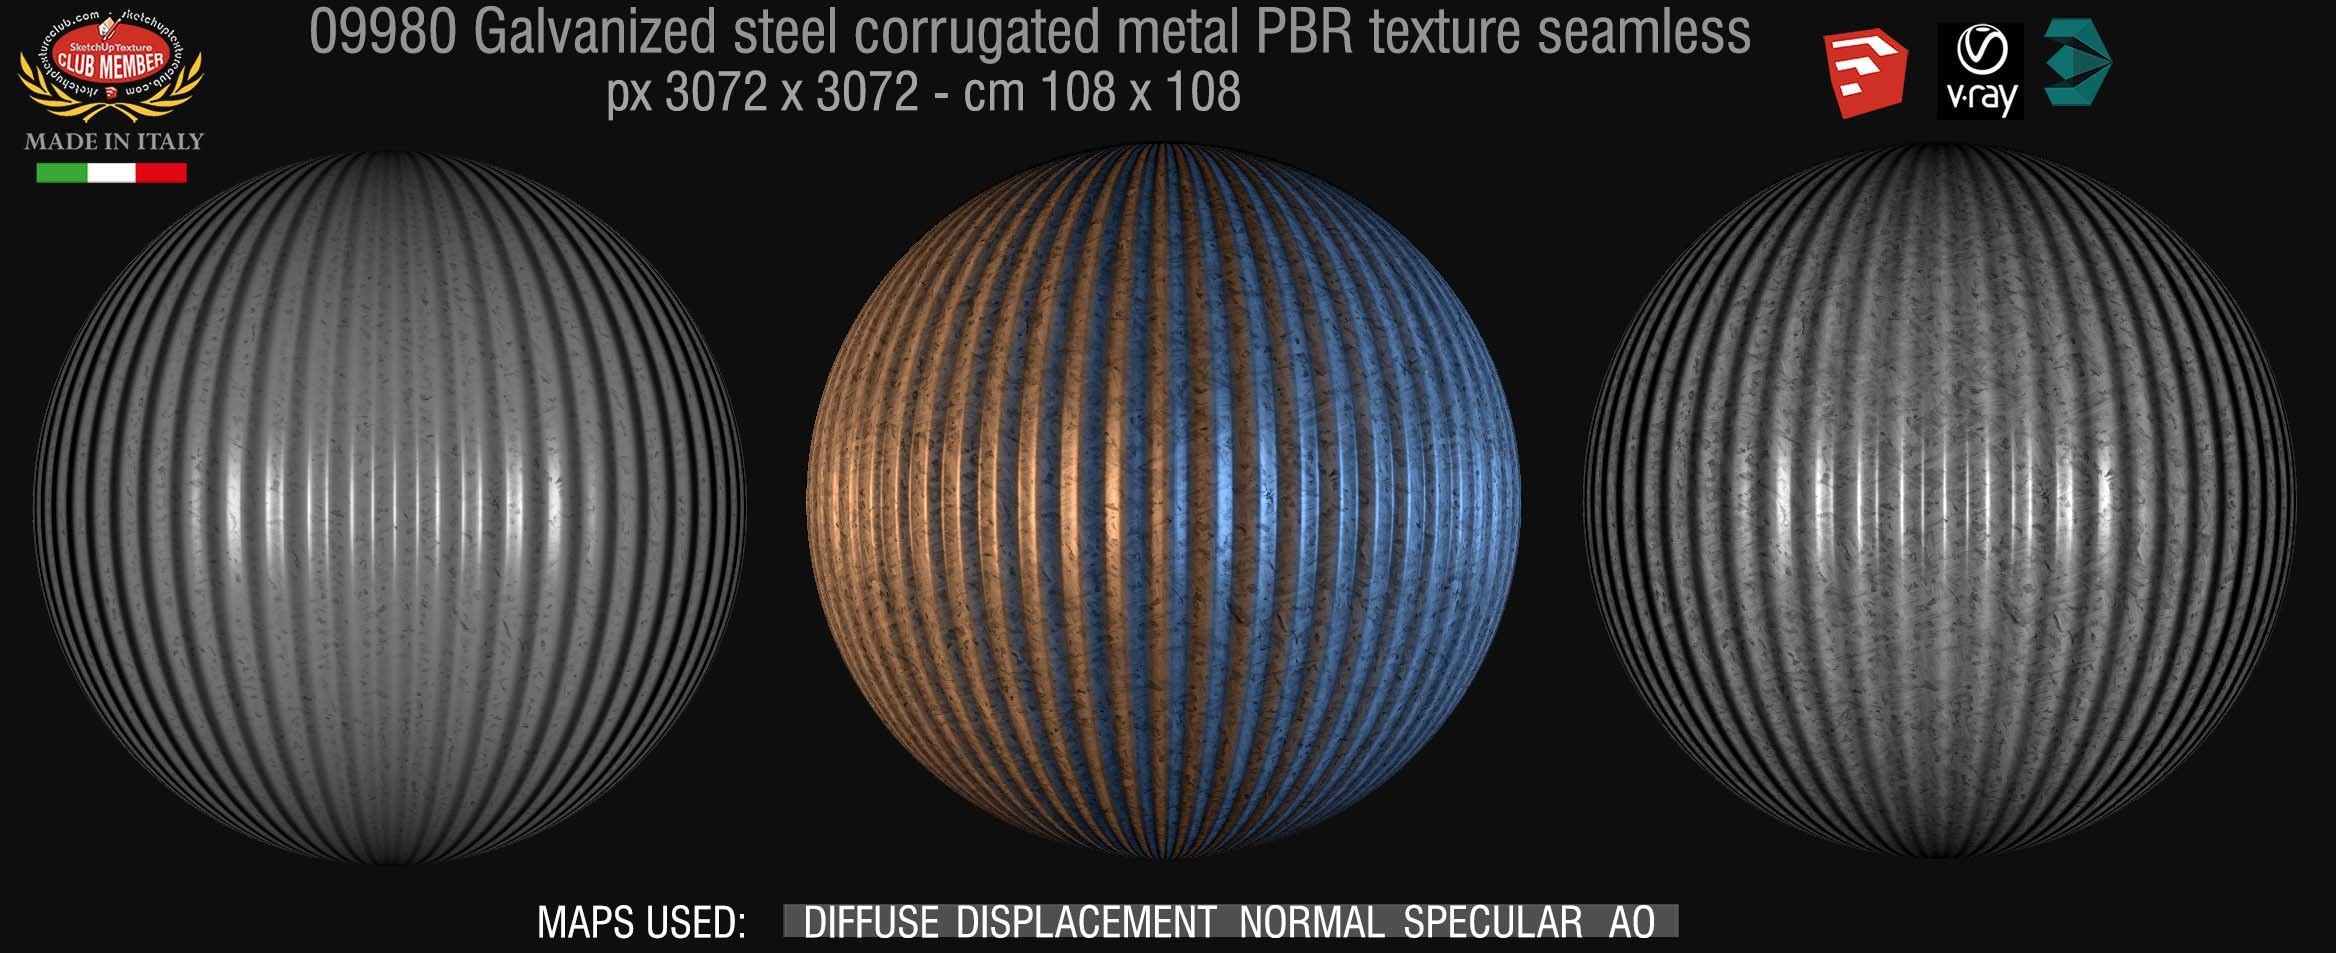 09980 Galvanized steel corrugated metal PBR texture seamless DEMO